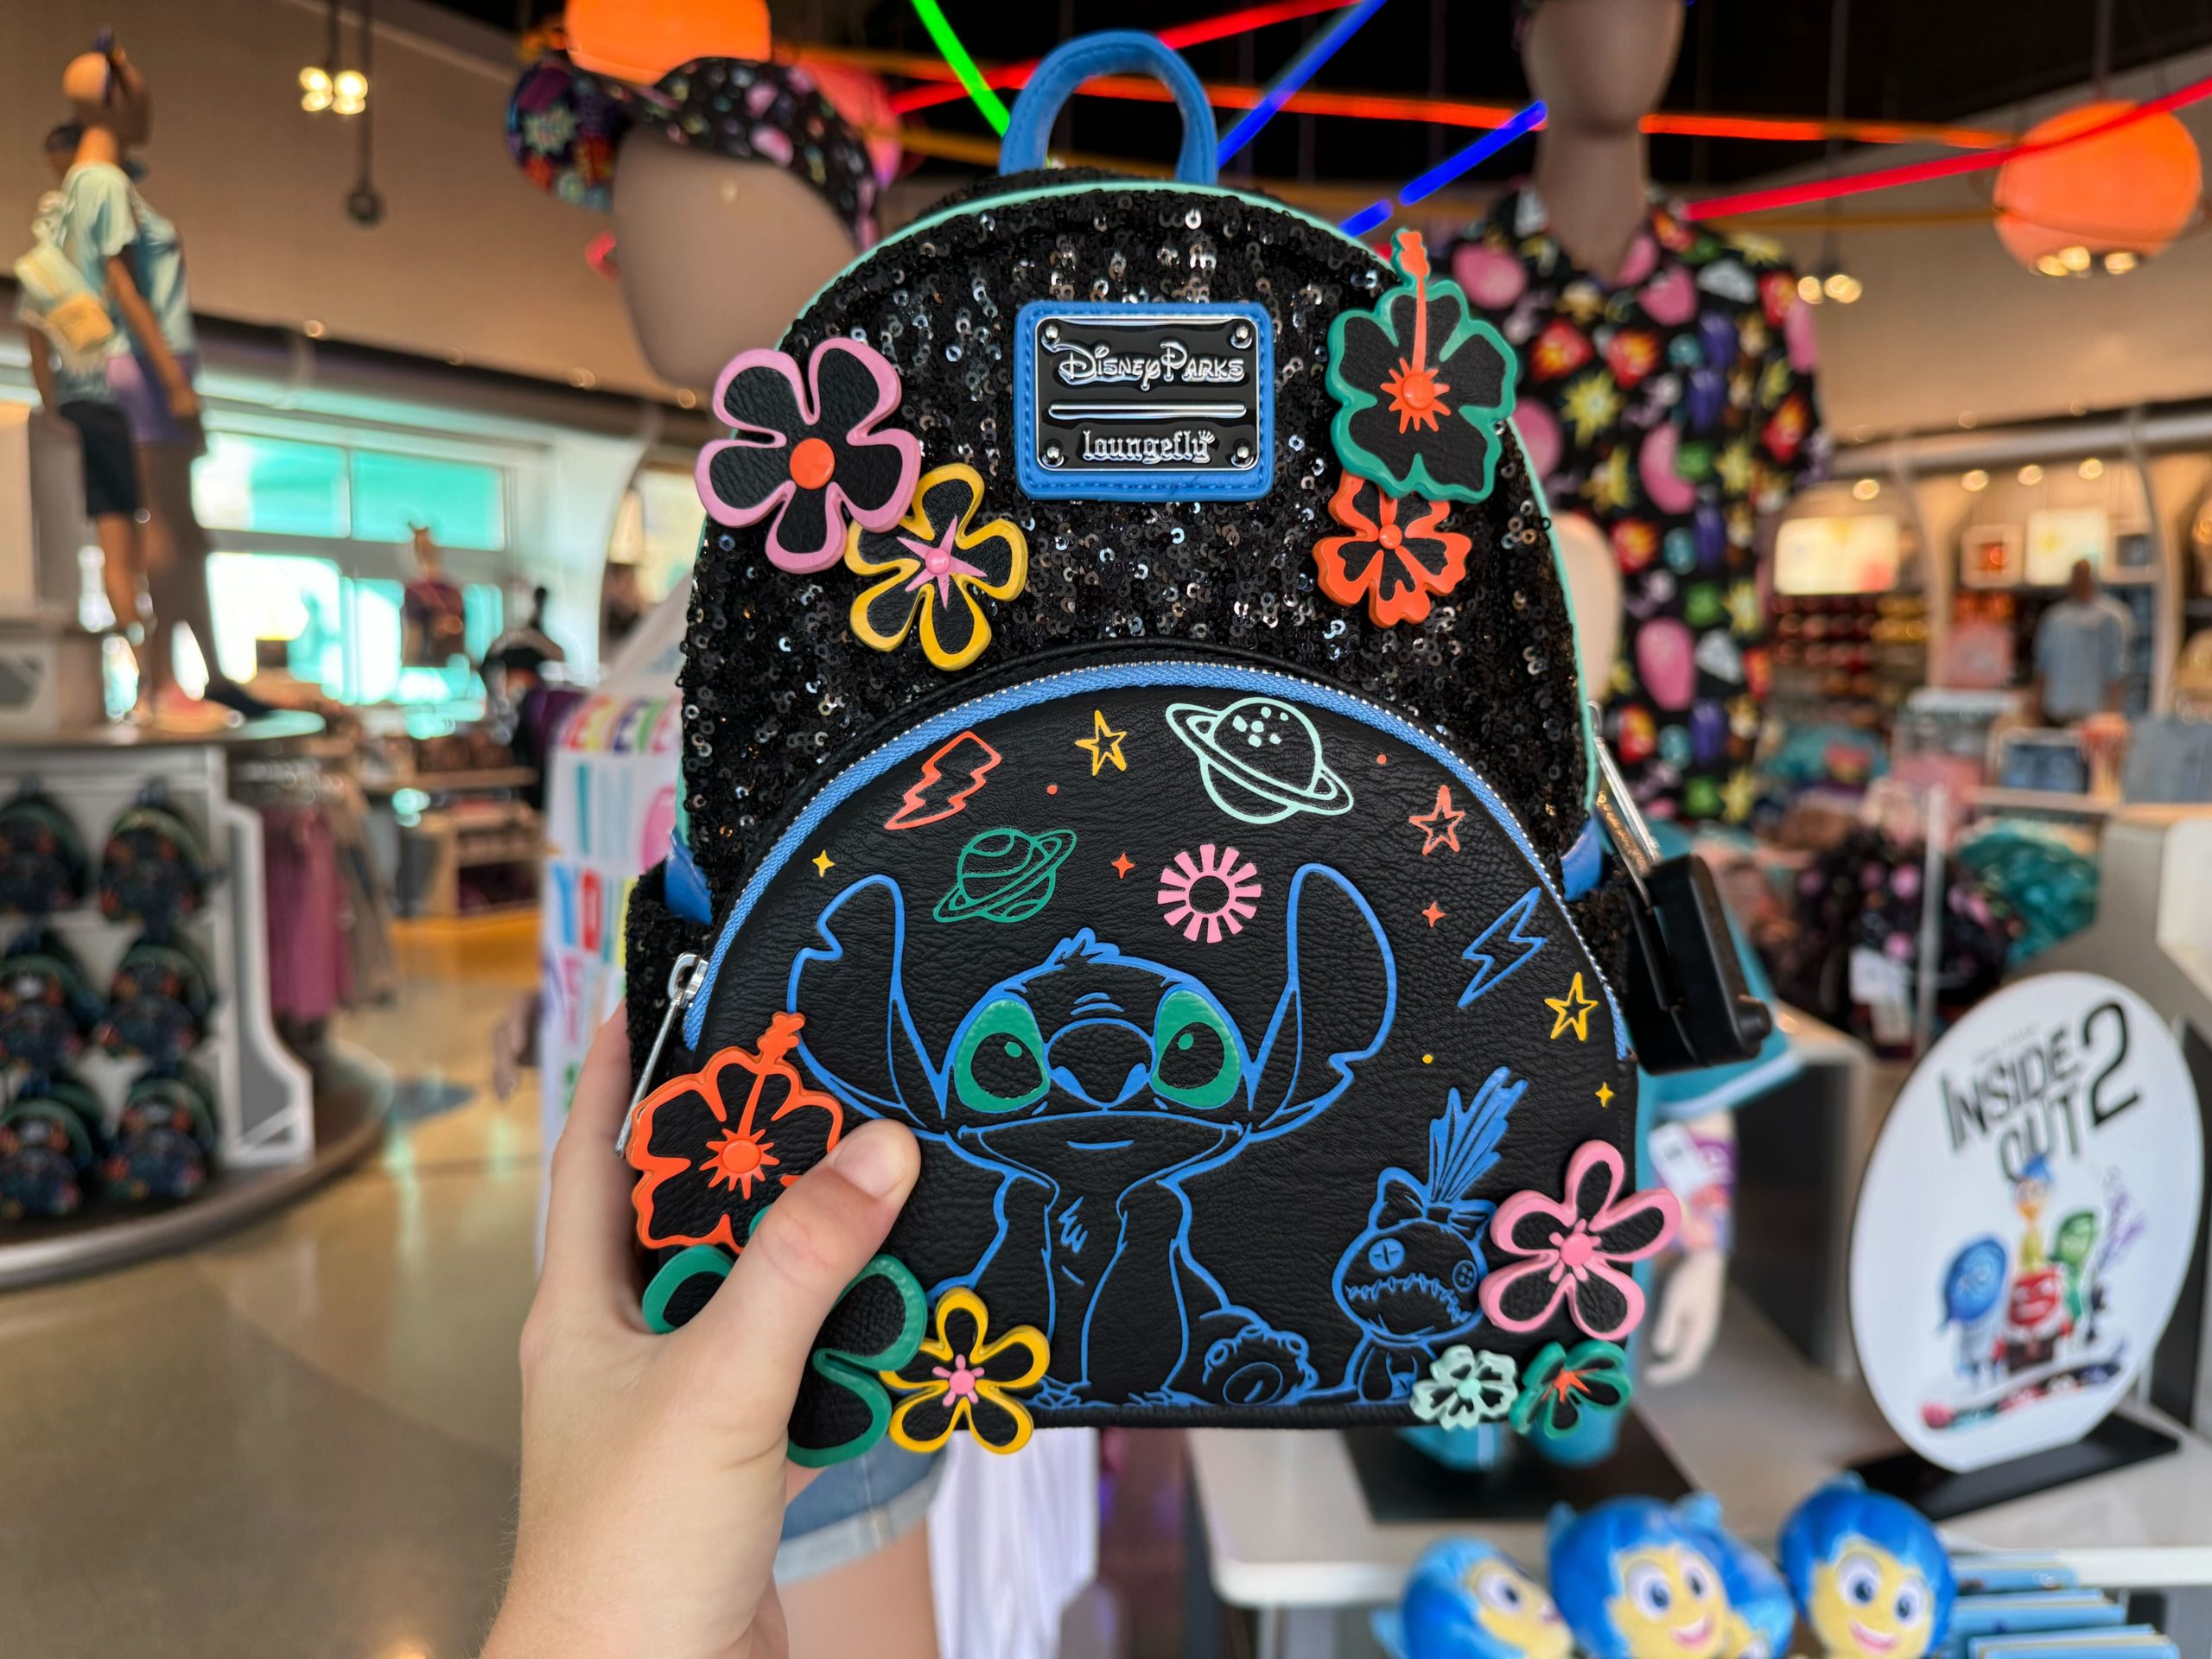 Stitch Loungefly Mini Backpack 